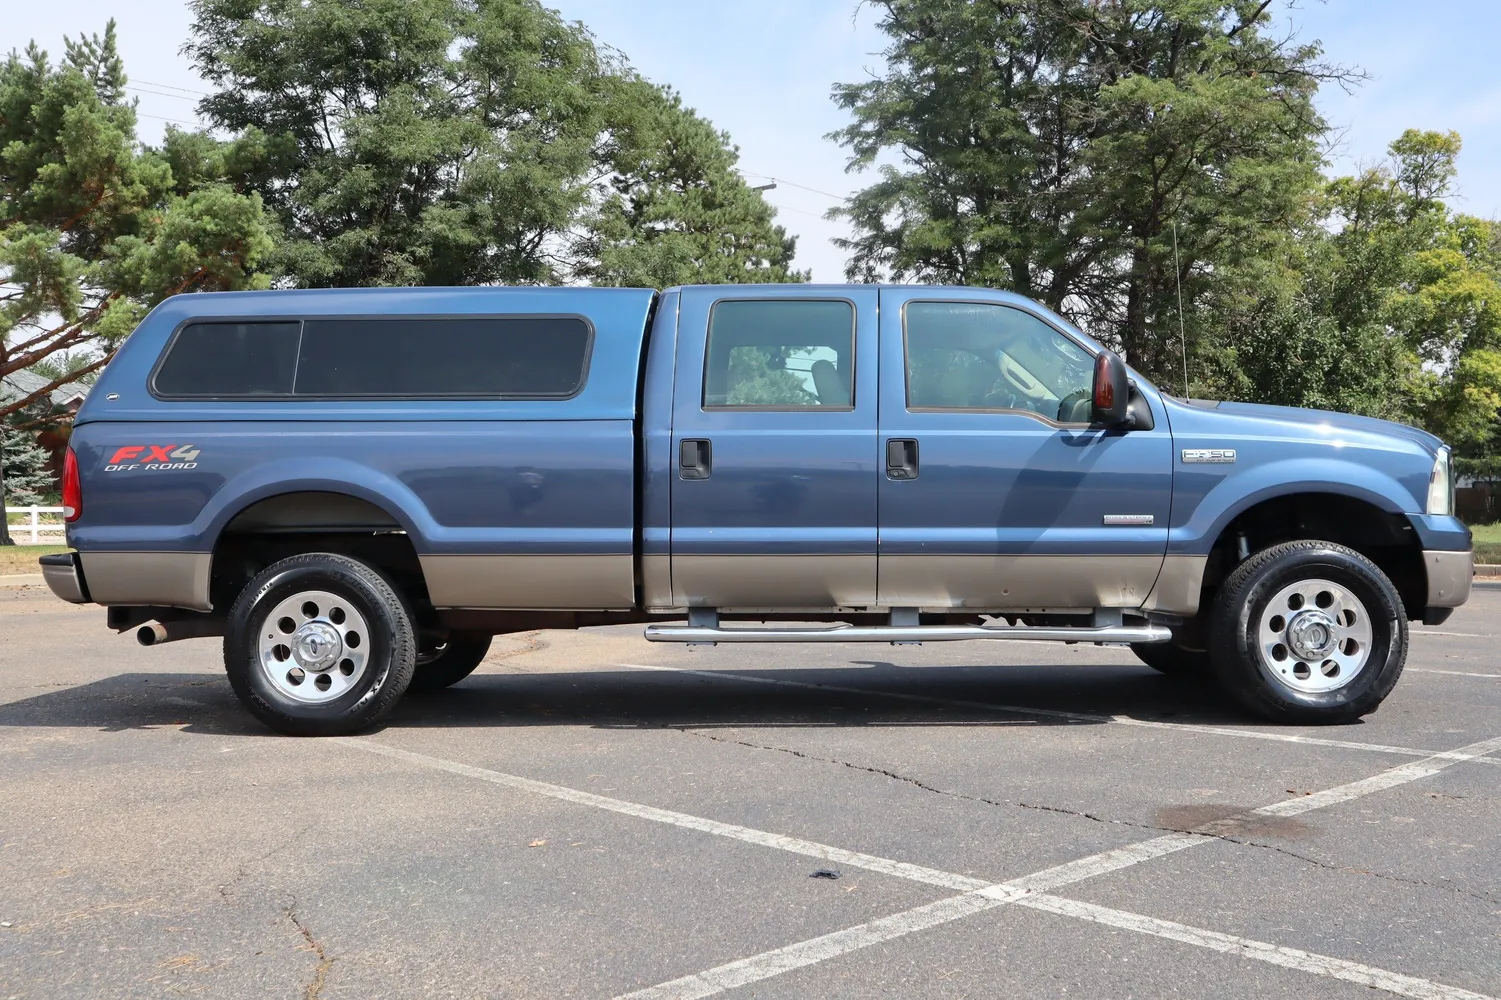 Ford Bronco Azure Gray Metallic 2023 Bronco (w/ new rock rails design) -- first look sighting 1663551433282